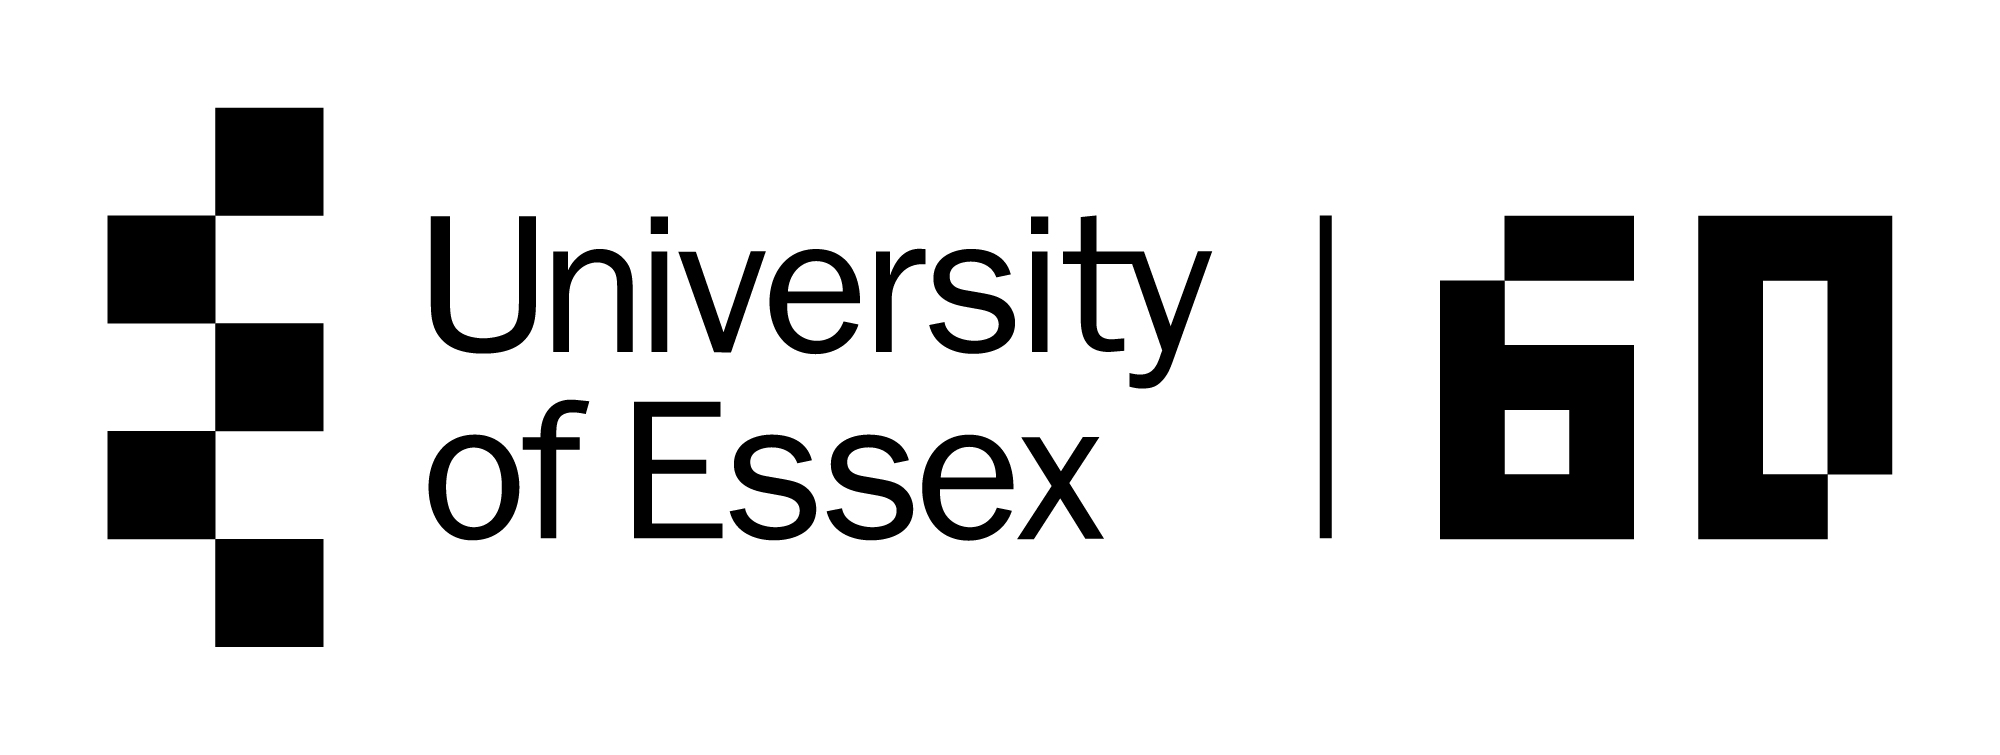 University of Essex 60th anniversary logo